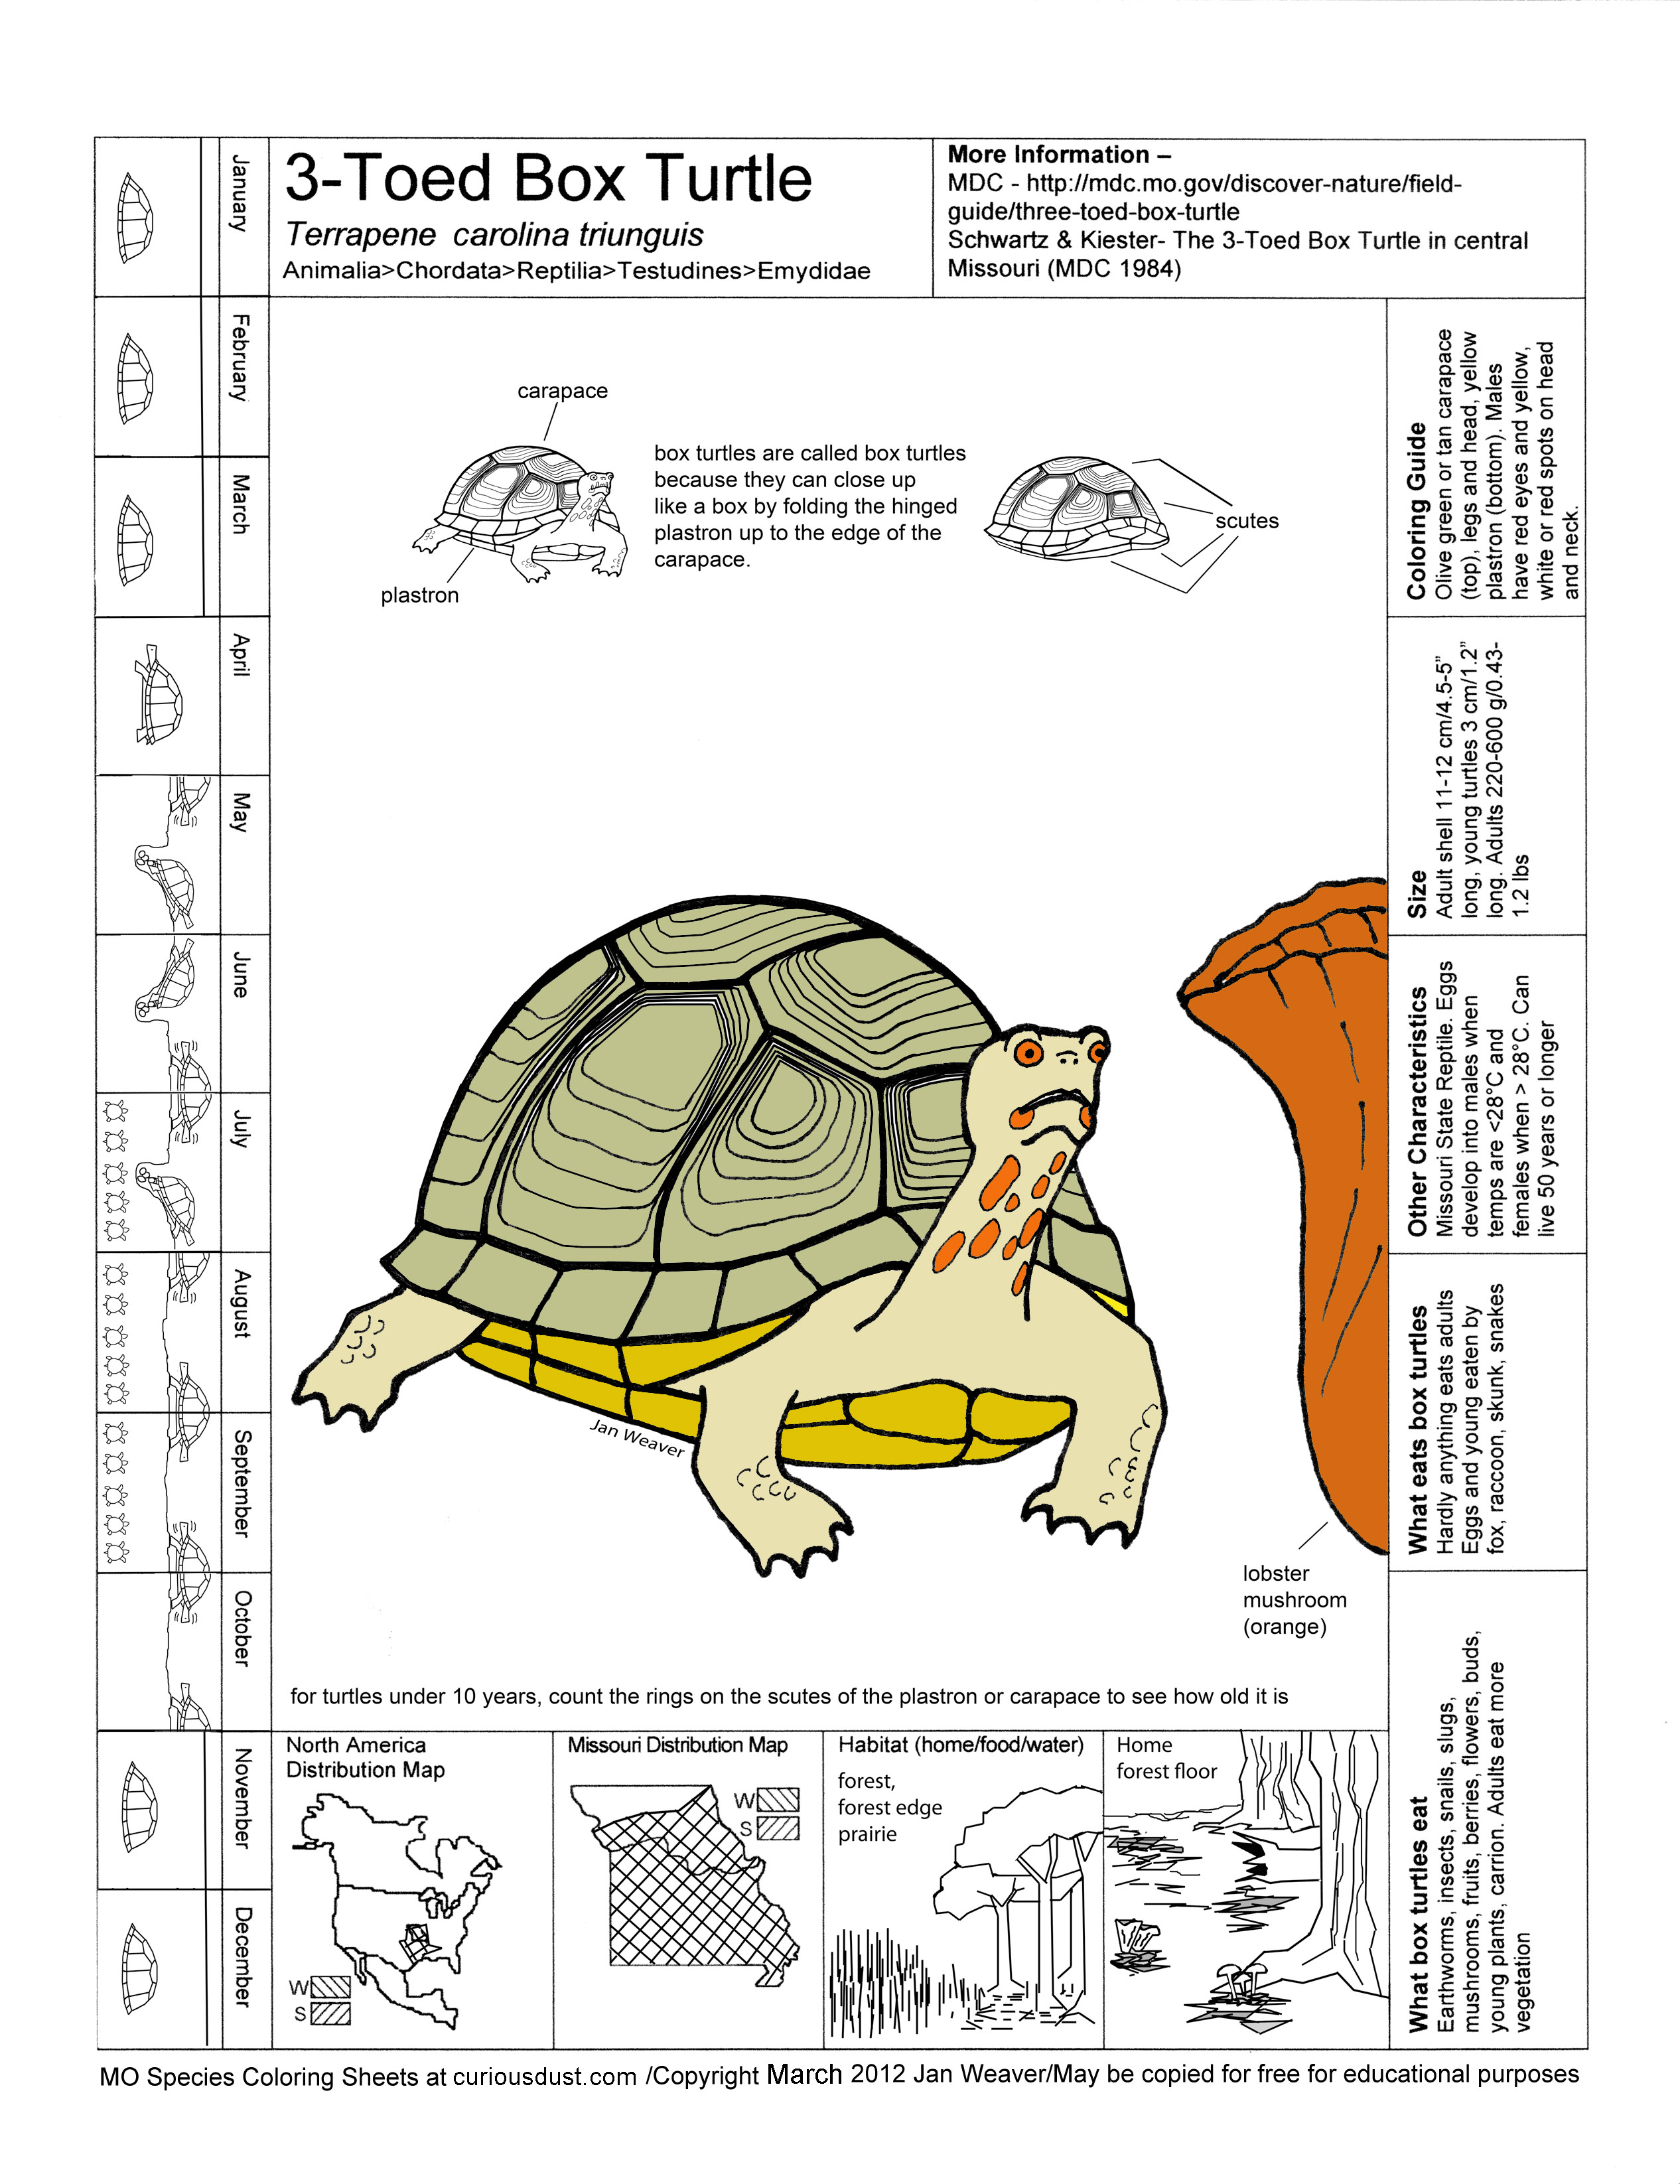 Box Turtle Image